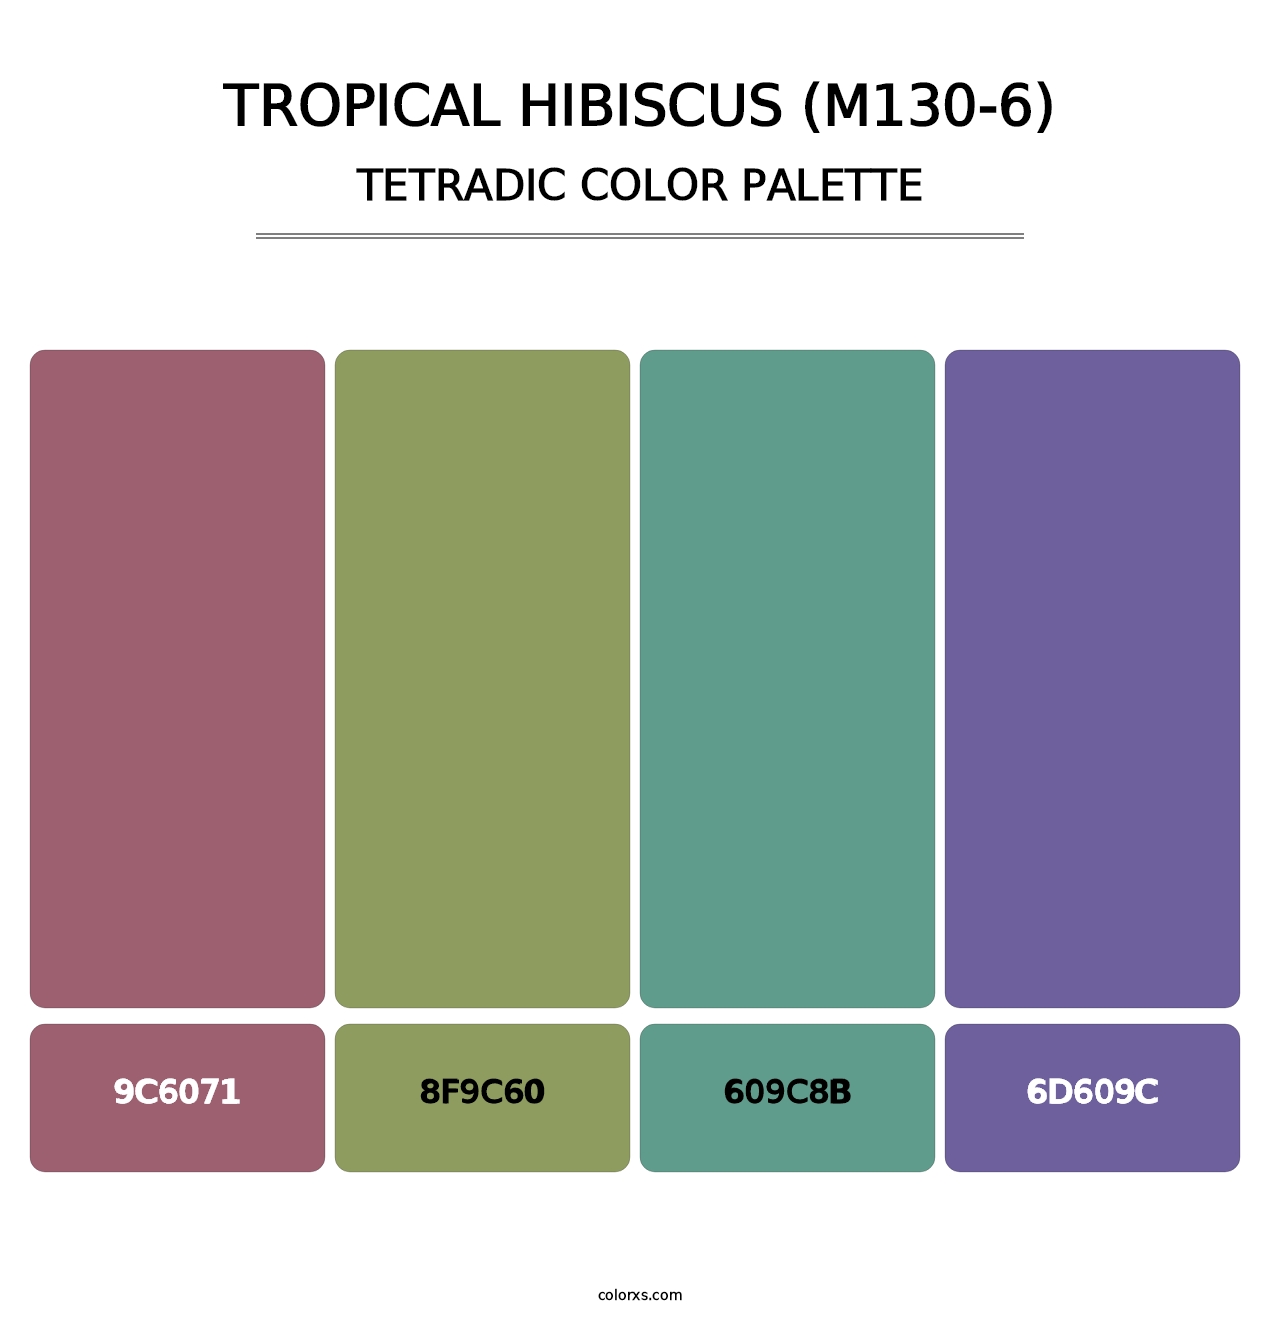 Tropical Hibiscus (M130-6) - Tetradic Color Palette